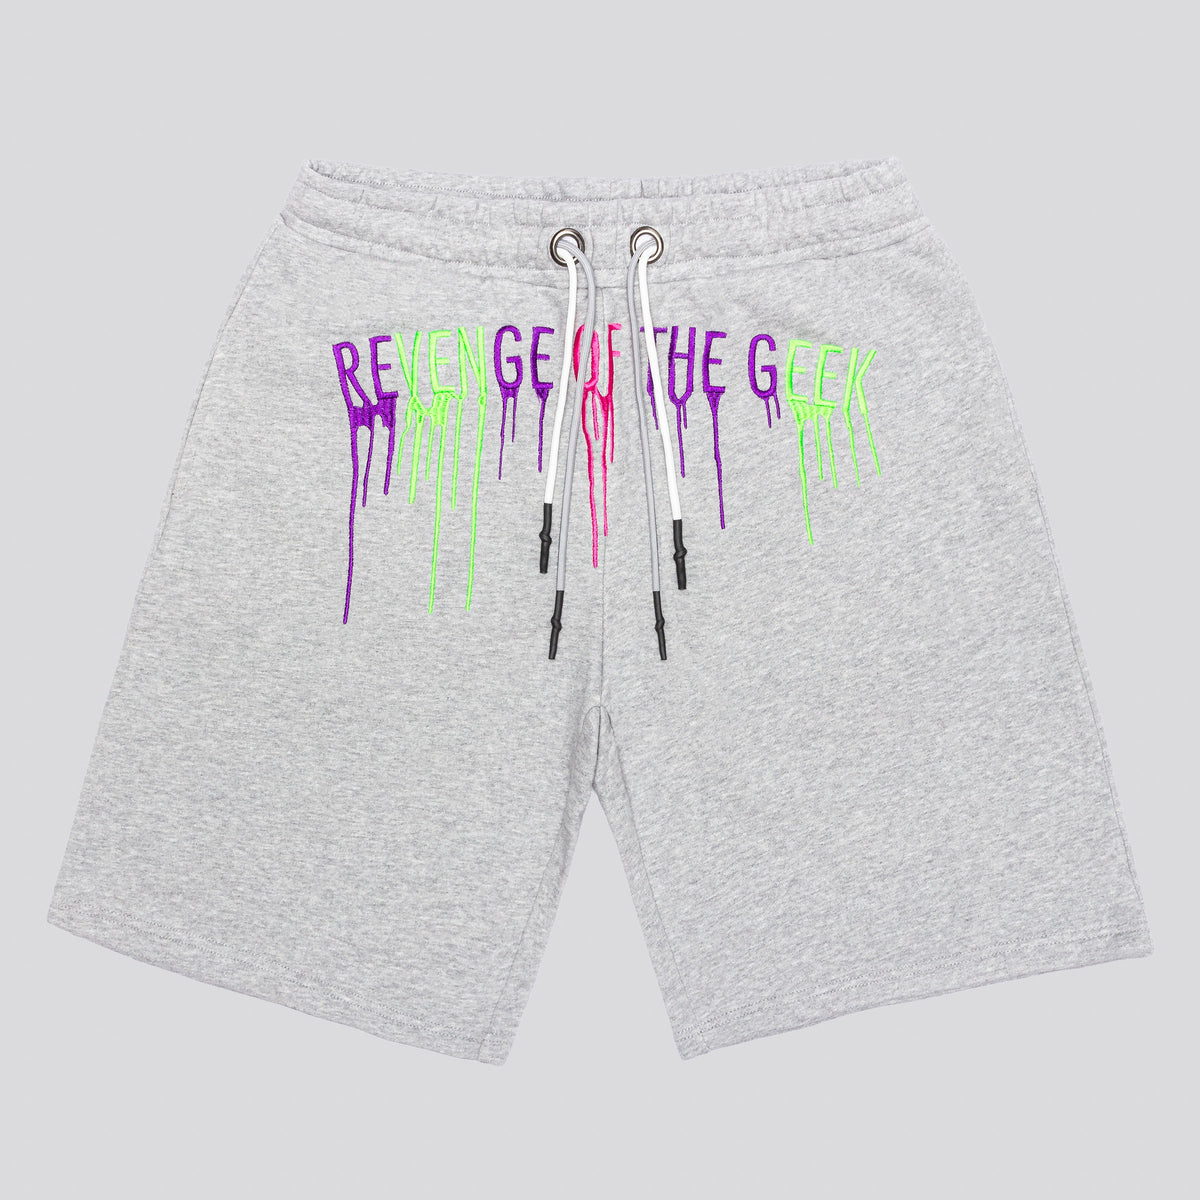 Revenge of the Graffiti | Geek Drip Shorts Sweat Grey